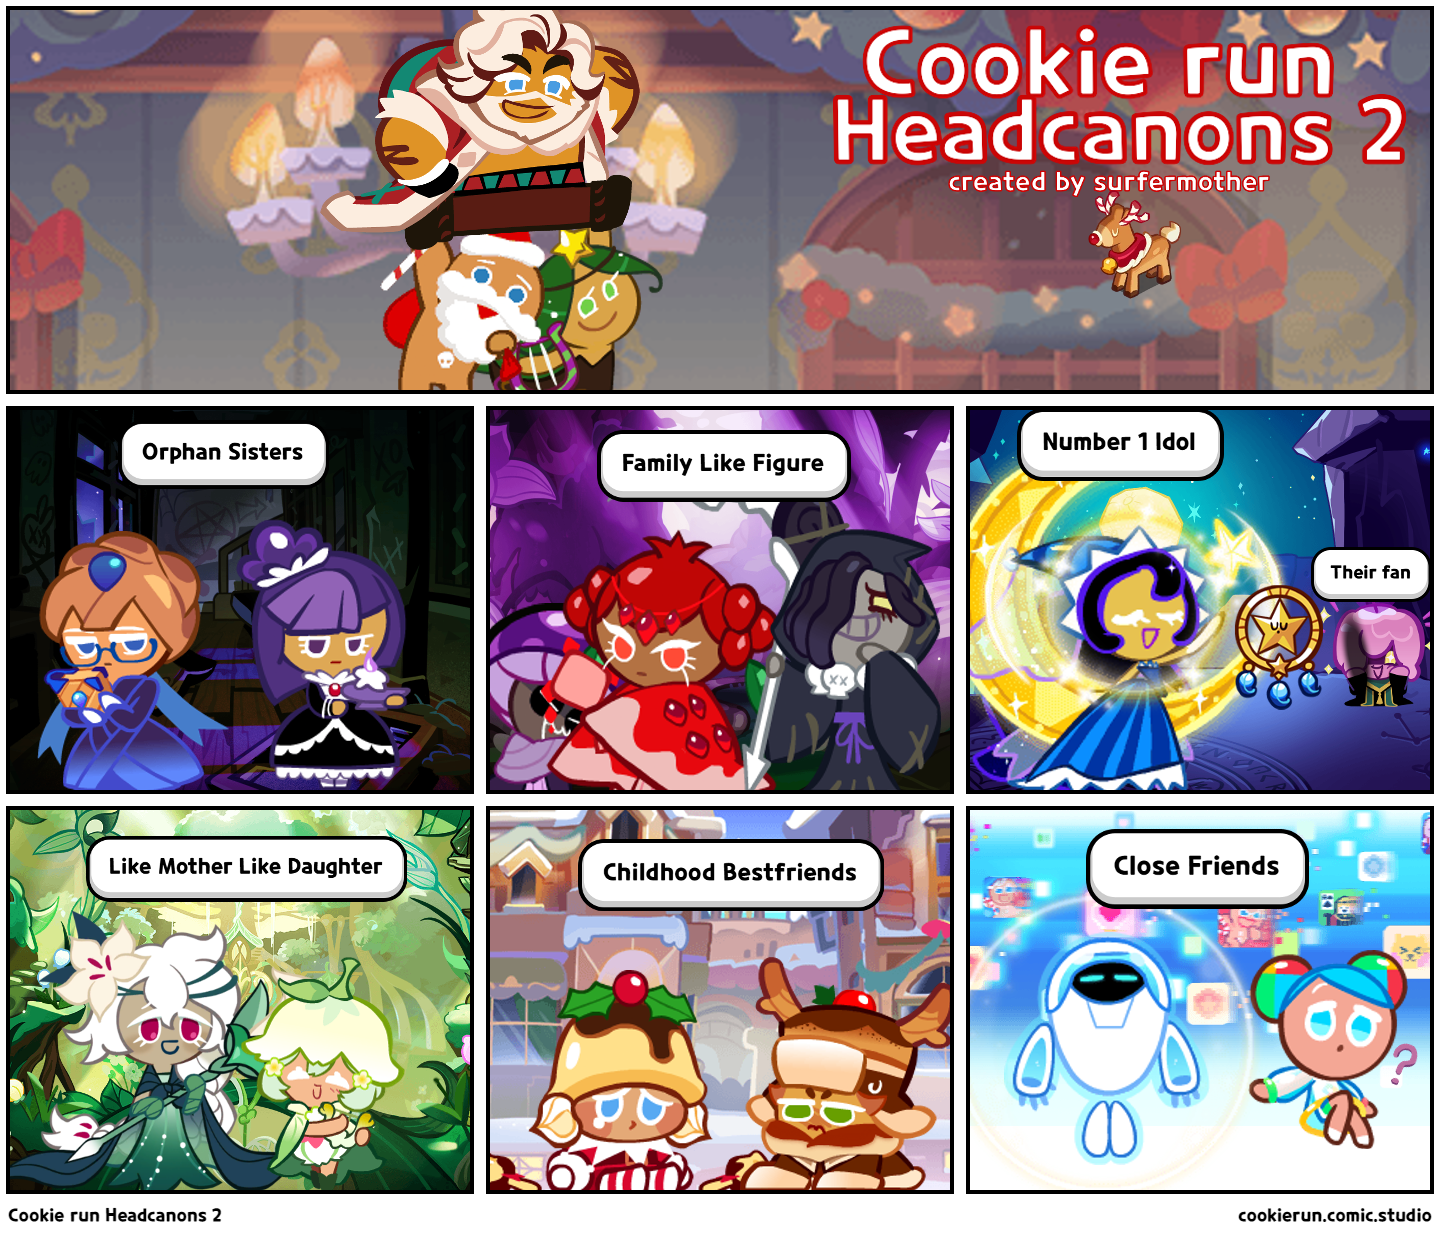 Cookie run Headcanons 2